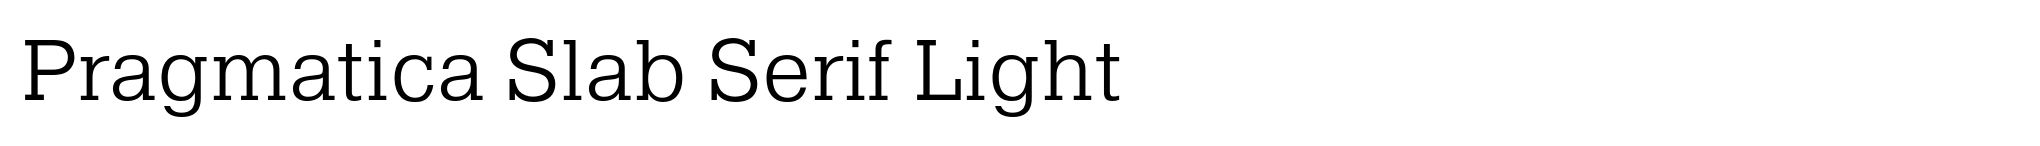 Pragmatica Slab Serif Light image